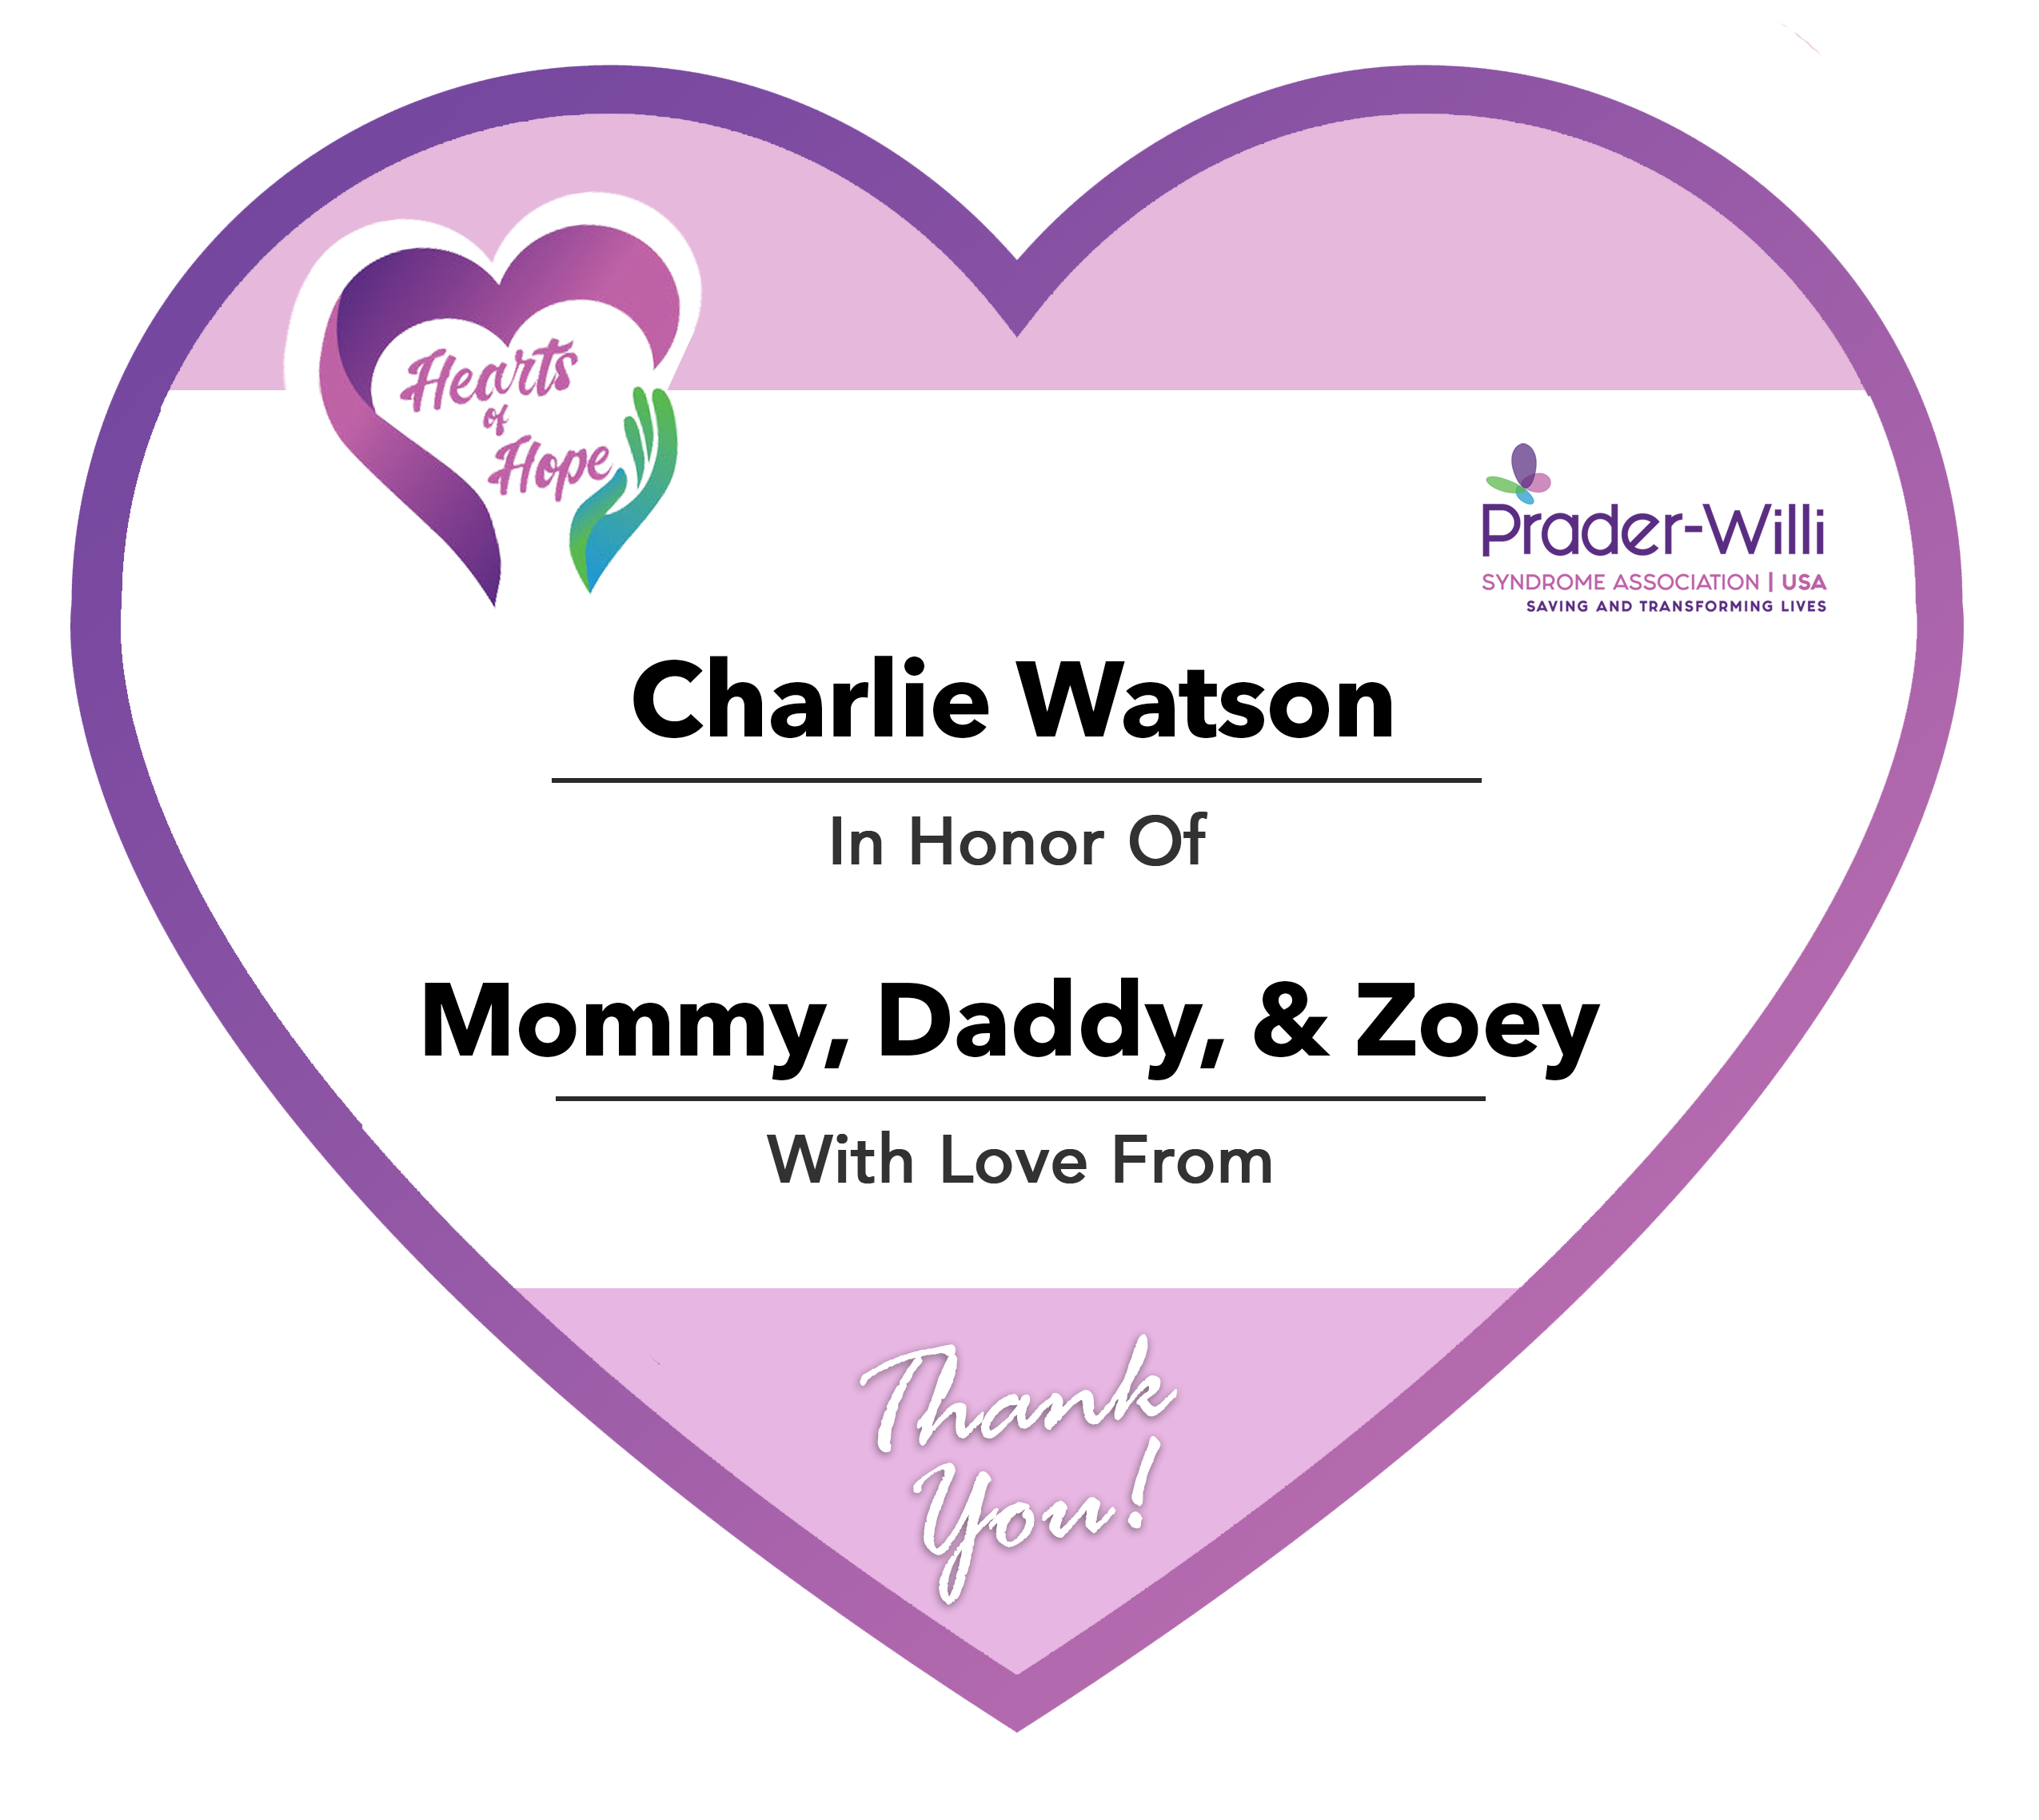 PWSA Paperheart CharlieWatson, Prader-Willi Syndrome Association | USA